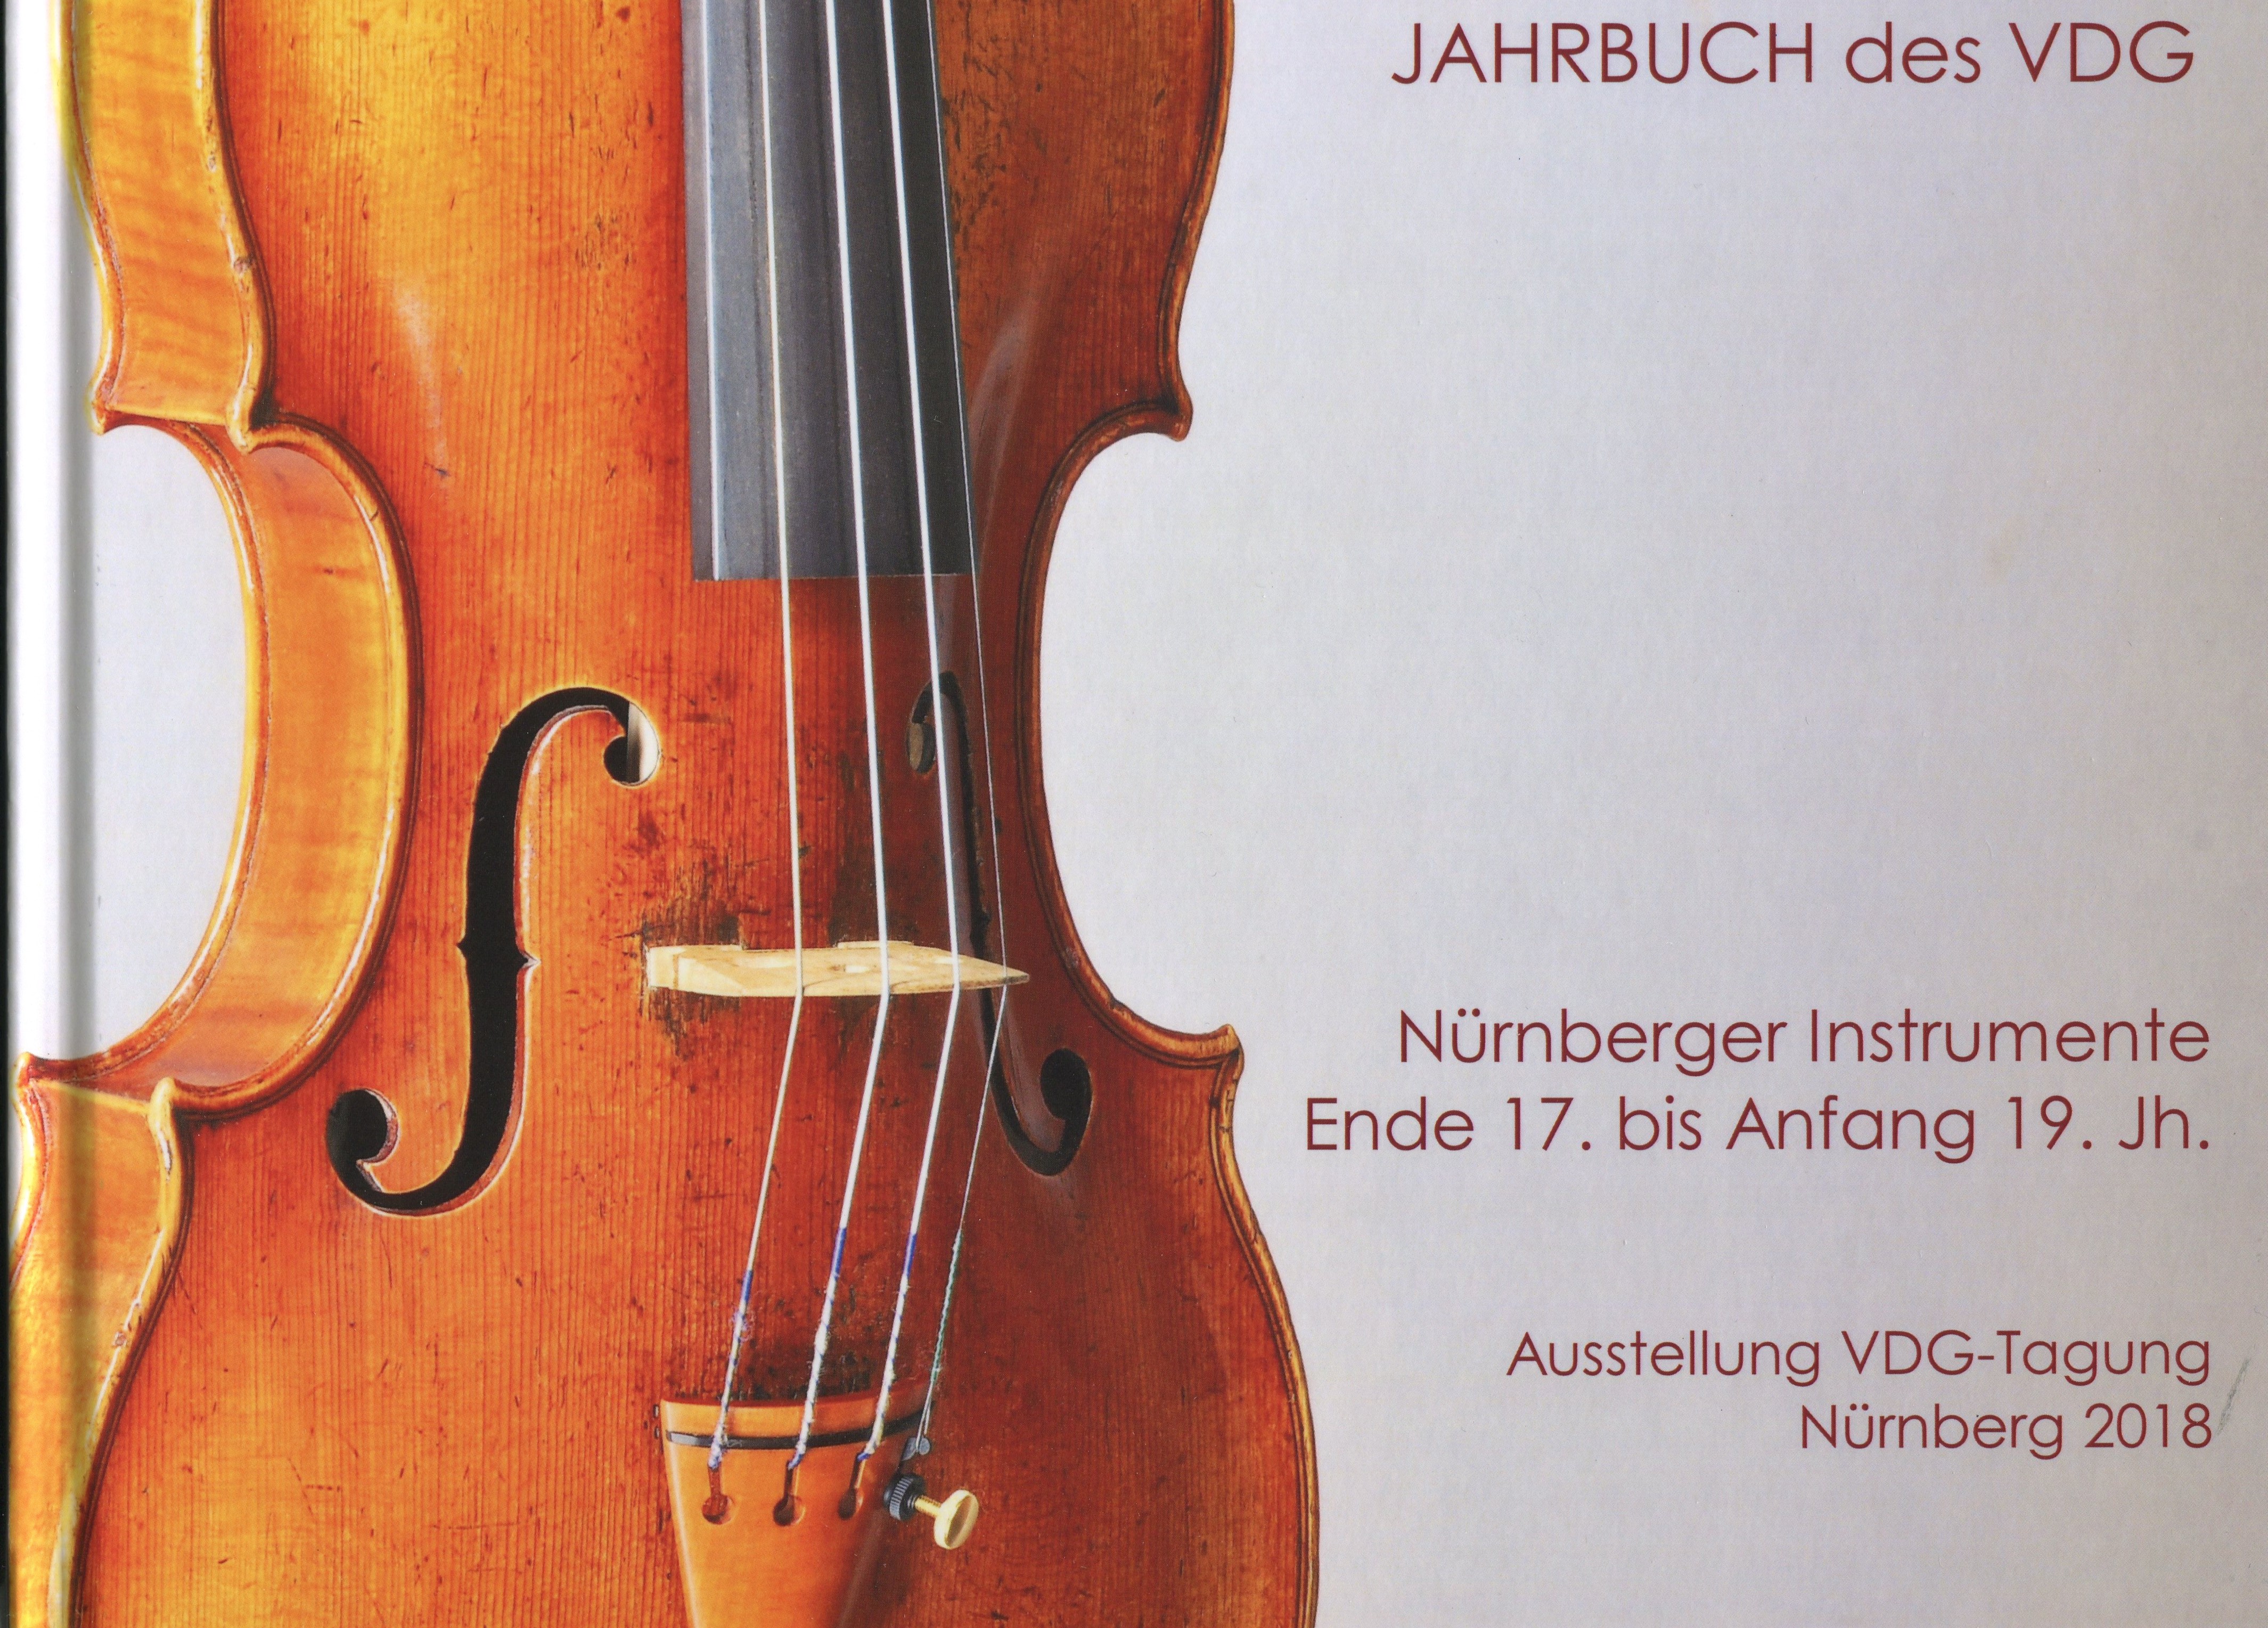 VDG: Nürnberger Instrumente - Tagung Nürnberg 2018